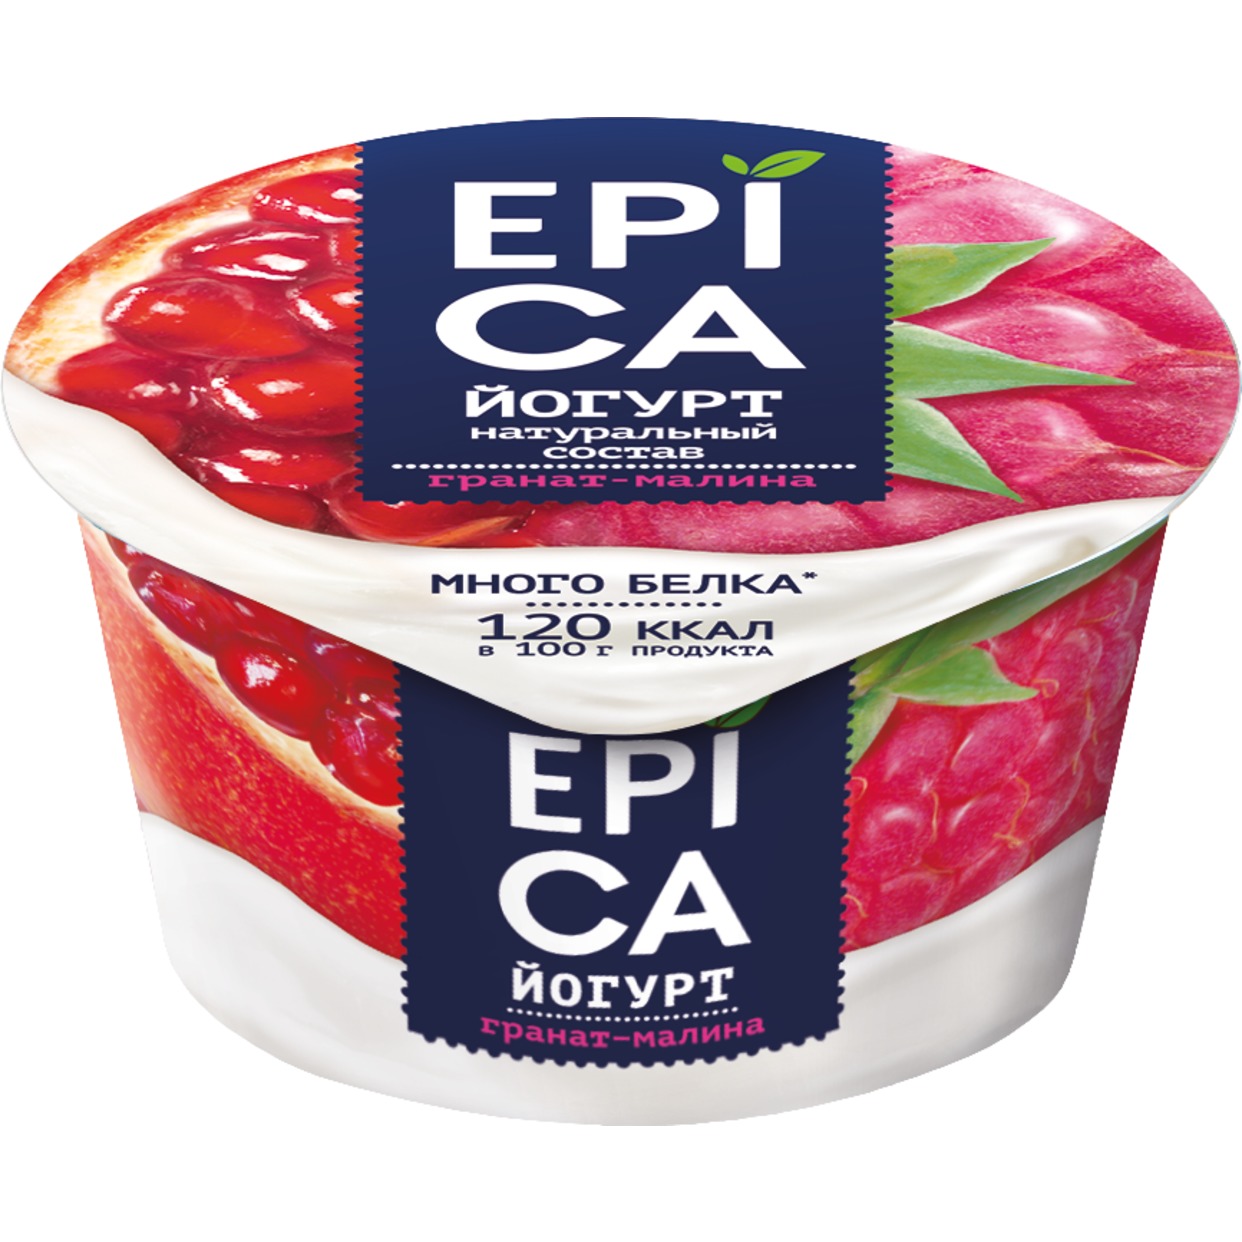 Йогурт Epica, гранат-малина, 130 г по акции в Пятерочке